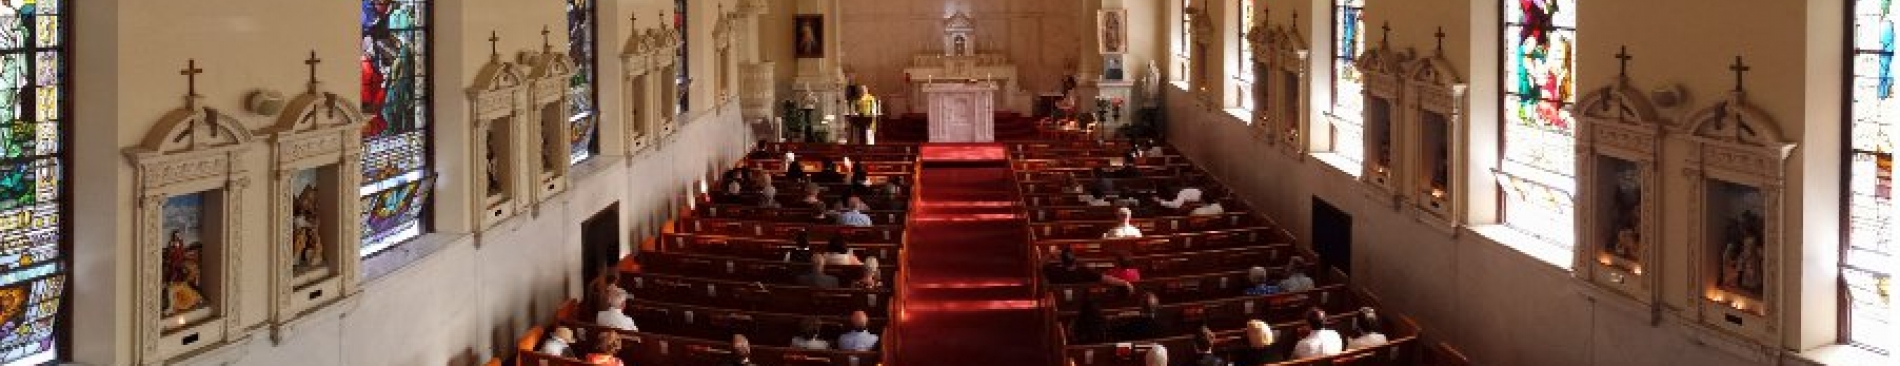 Slideshow: Fr. Buckley Offers Local KofC Mass